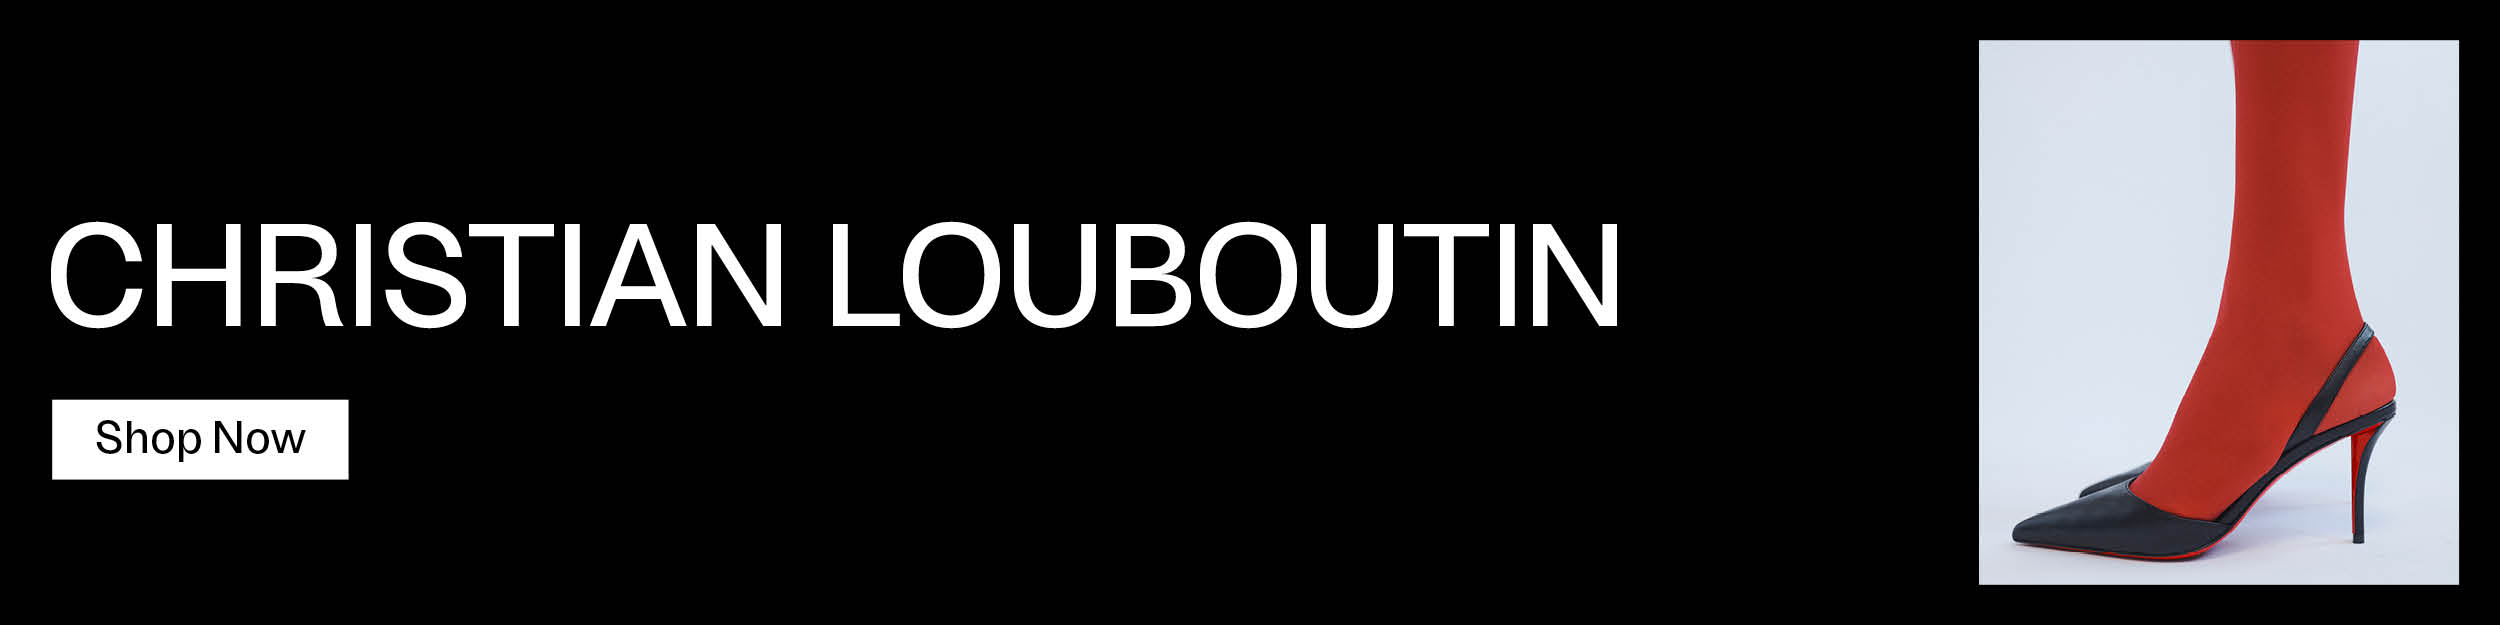 Christian Louboutin - Shop Now